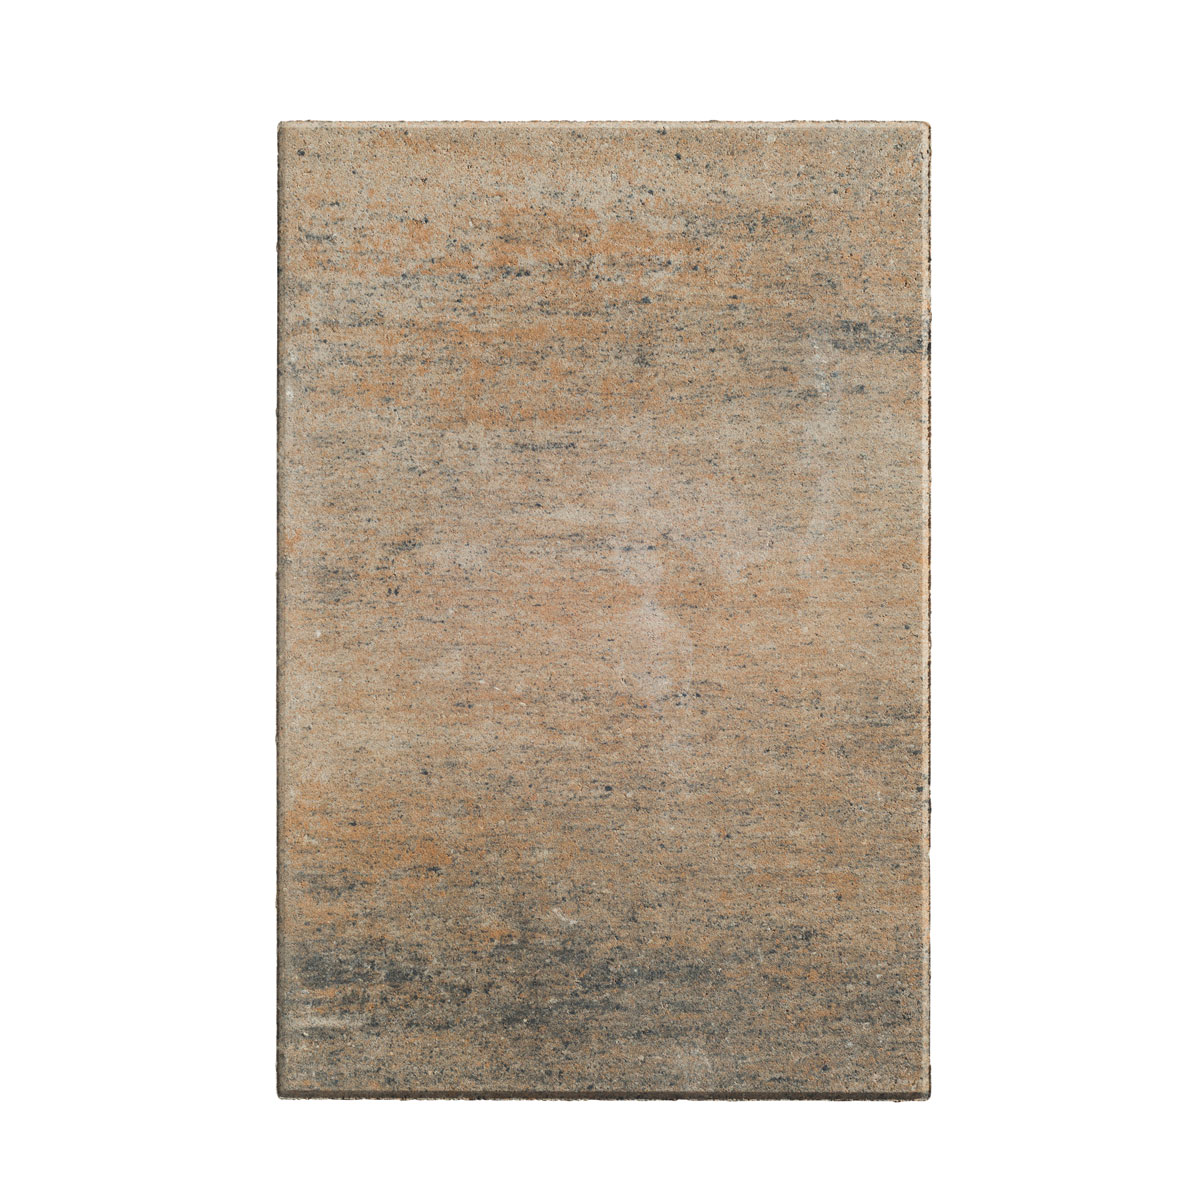 Terrassenplatte „No. 1 Plain“, Muschelkalk, 60x40x4 cm